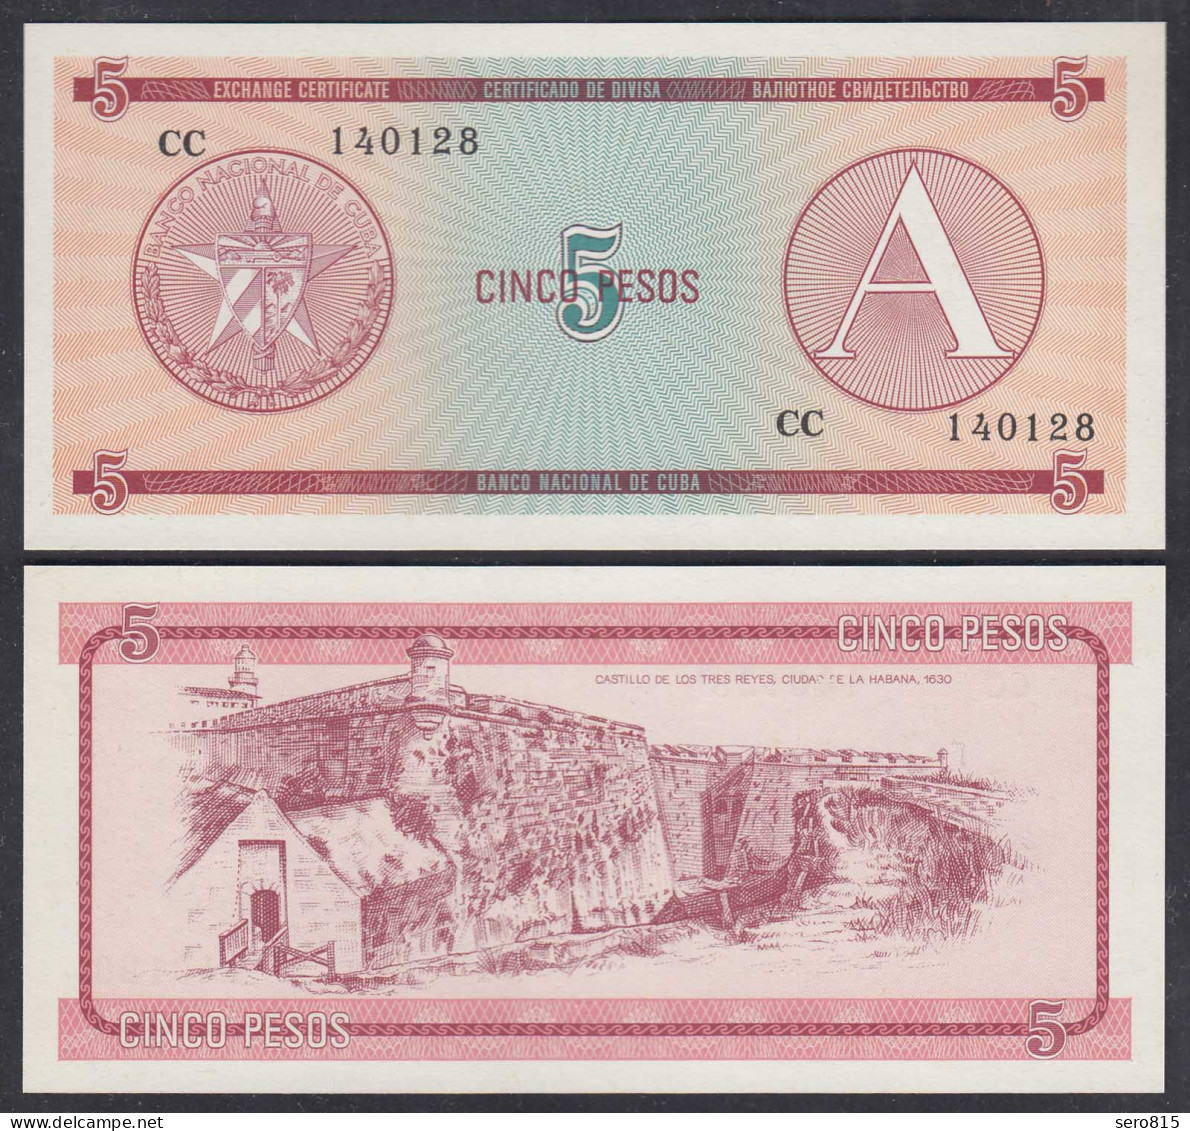 Kuba - Cuba 5 Peso Foreign Exchange Certificates 1985 Pick FX3 UNC (1)  (26793 - Sonstige – Amerika